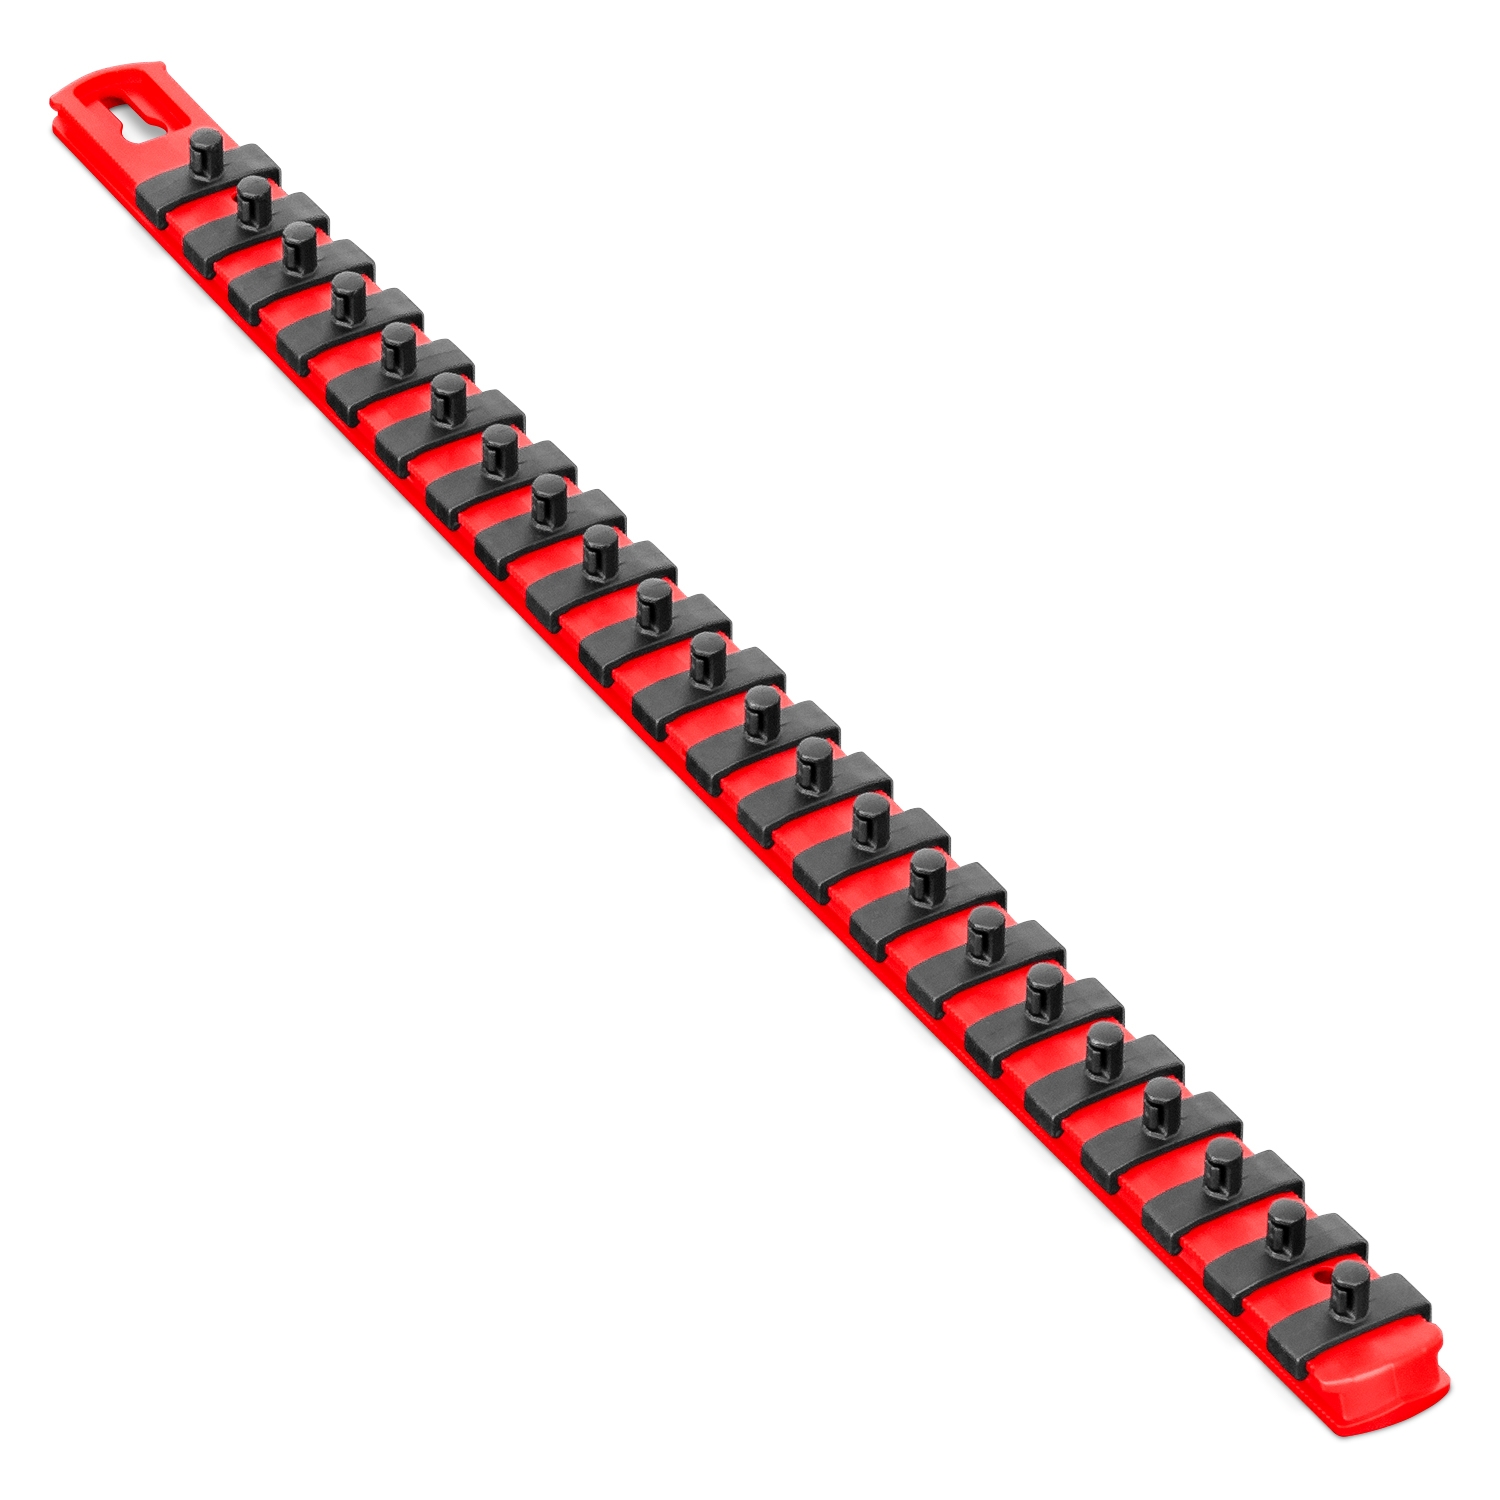 Details about   Ernst 8400M RED 1/4" Drive Socket Organizer Rail w/ Magnets & Twist Lock Clips 